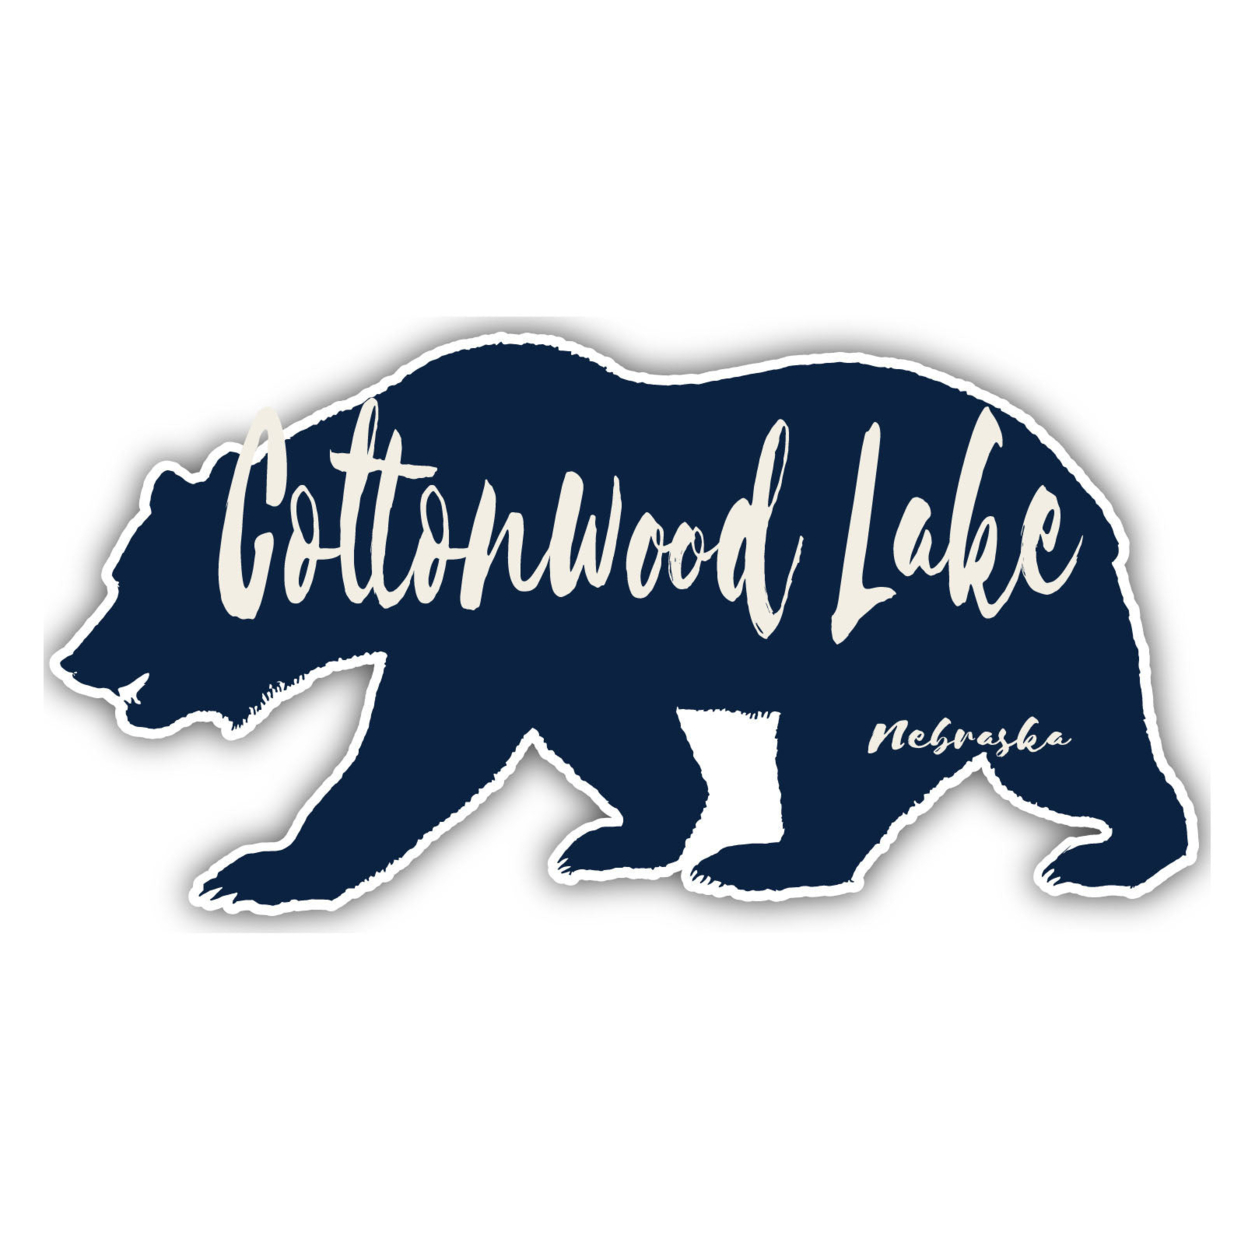 Cottonwood Lake Nebraska Souvenir Decorative Stickers (Choose Theme And Size) - Single Unit, 8-Inch, Bear